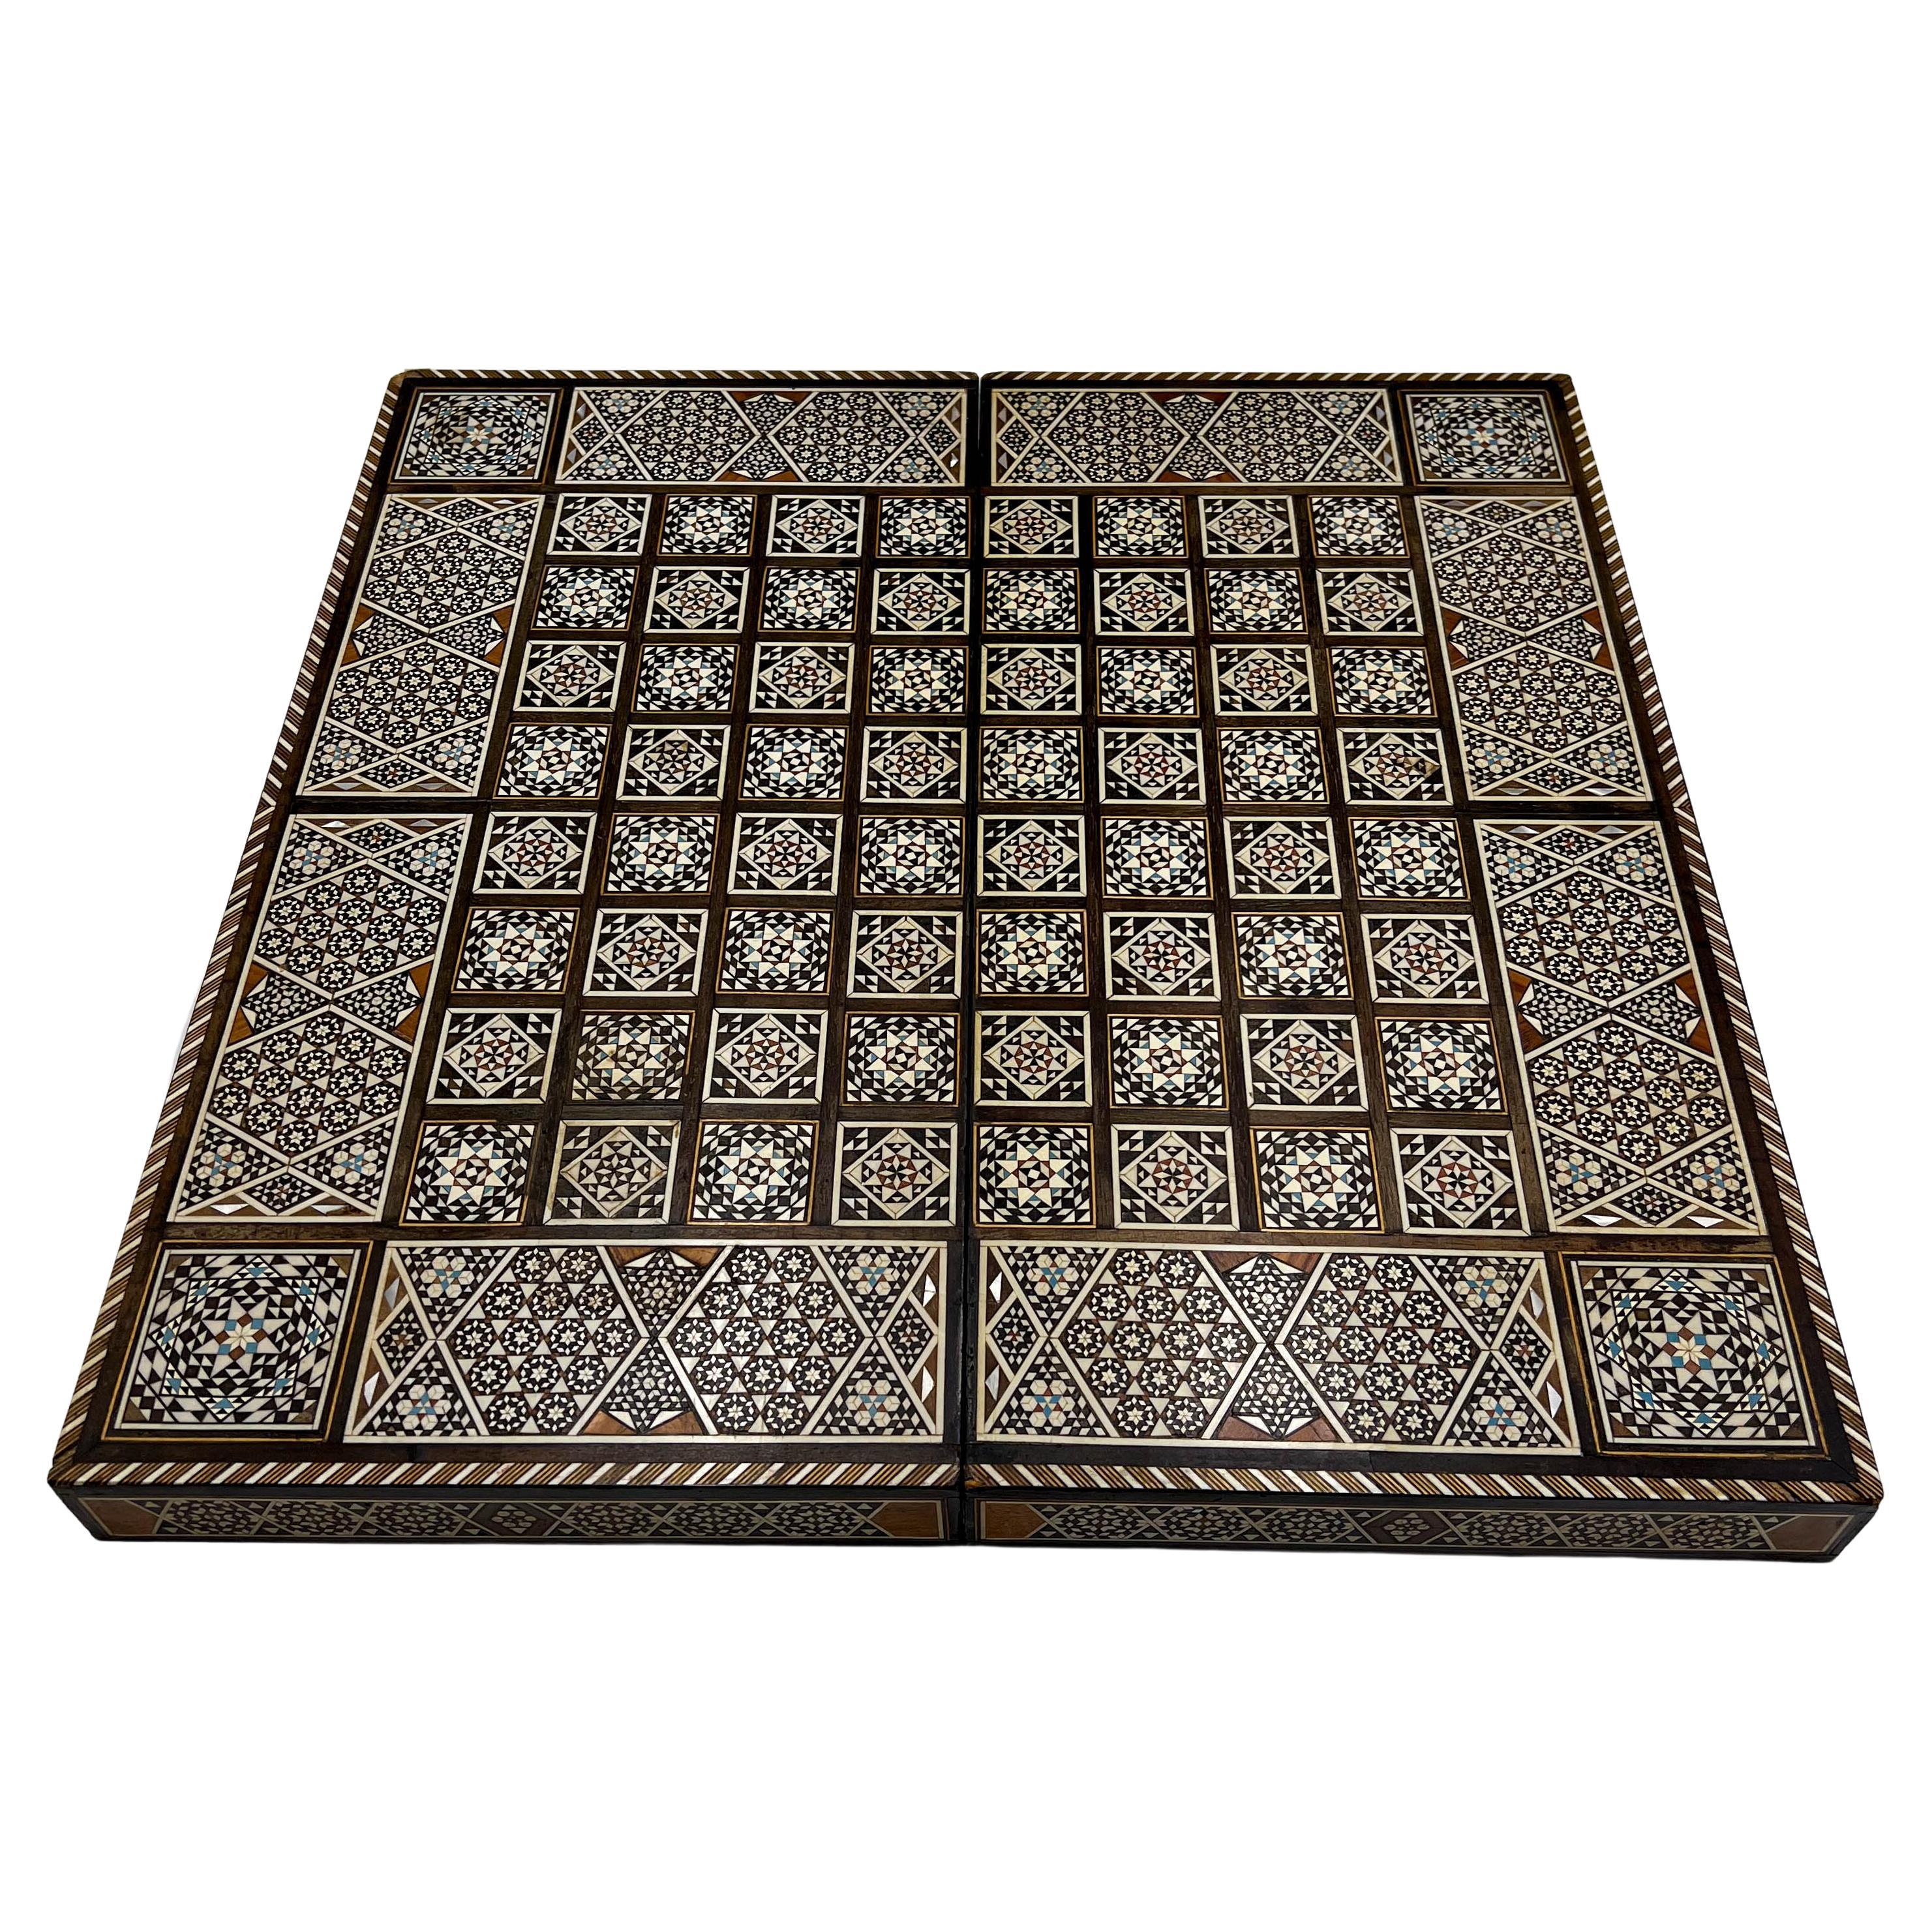 Arabesque Inlaid Backgammon & Chess Game Board